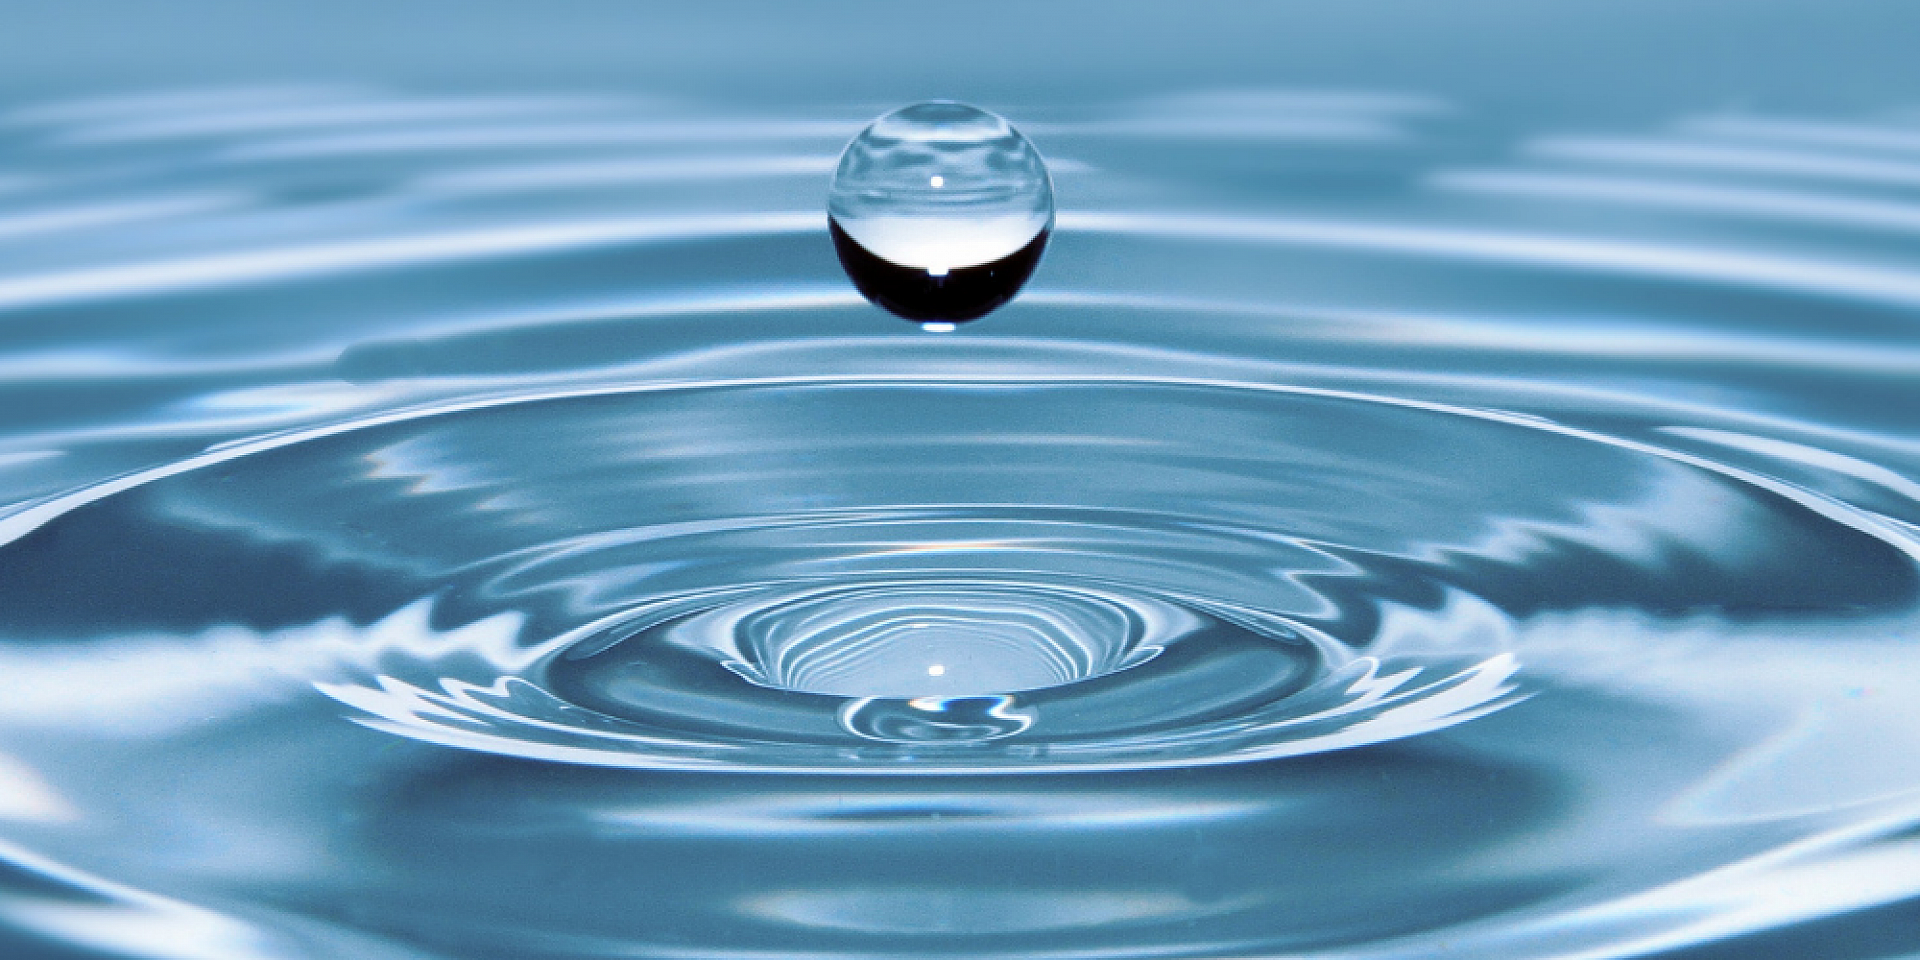 Water drop representing water resources